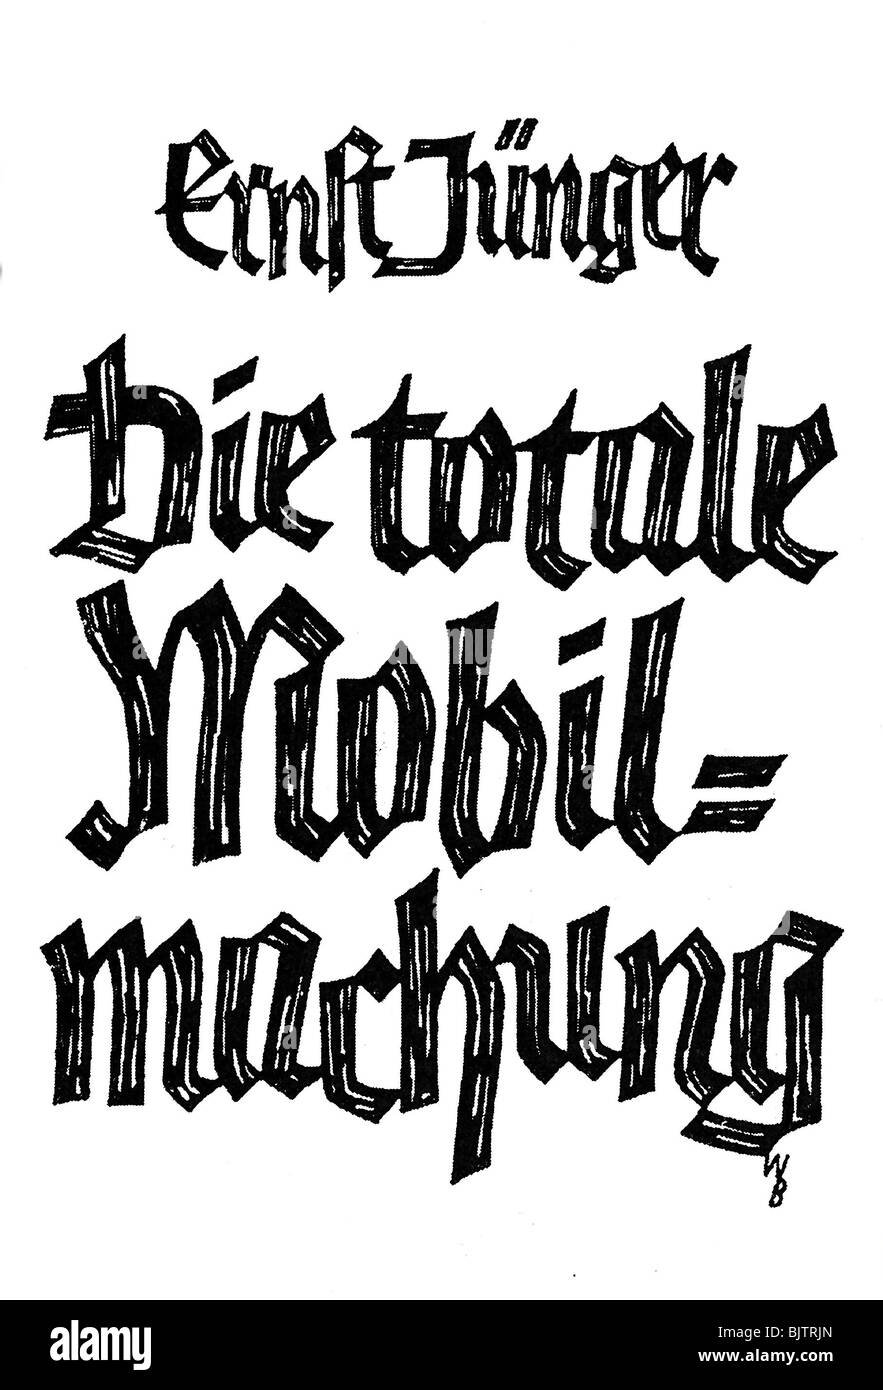 Juenger, Ernst, 29.3.1895- 17.2.1998, German author / writer, works, 'Die totale Mobilmachung', title, Berlin 1931, Stock Photo